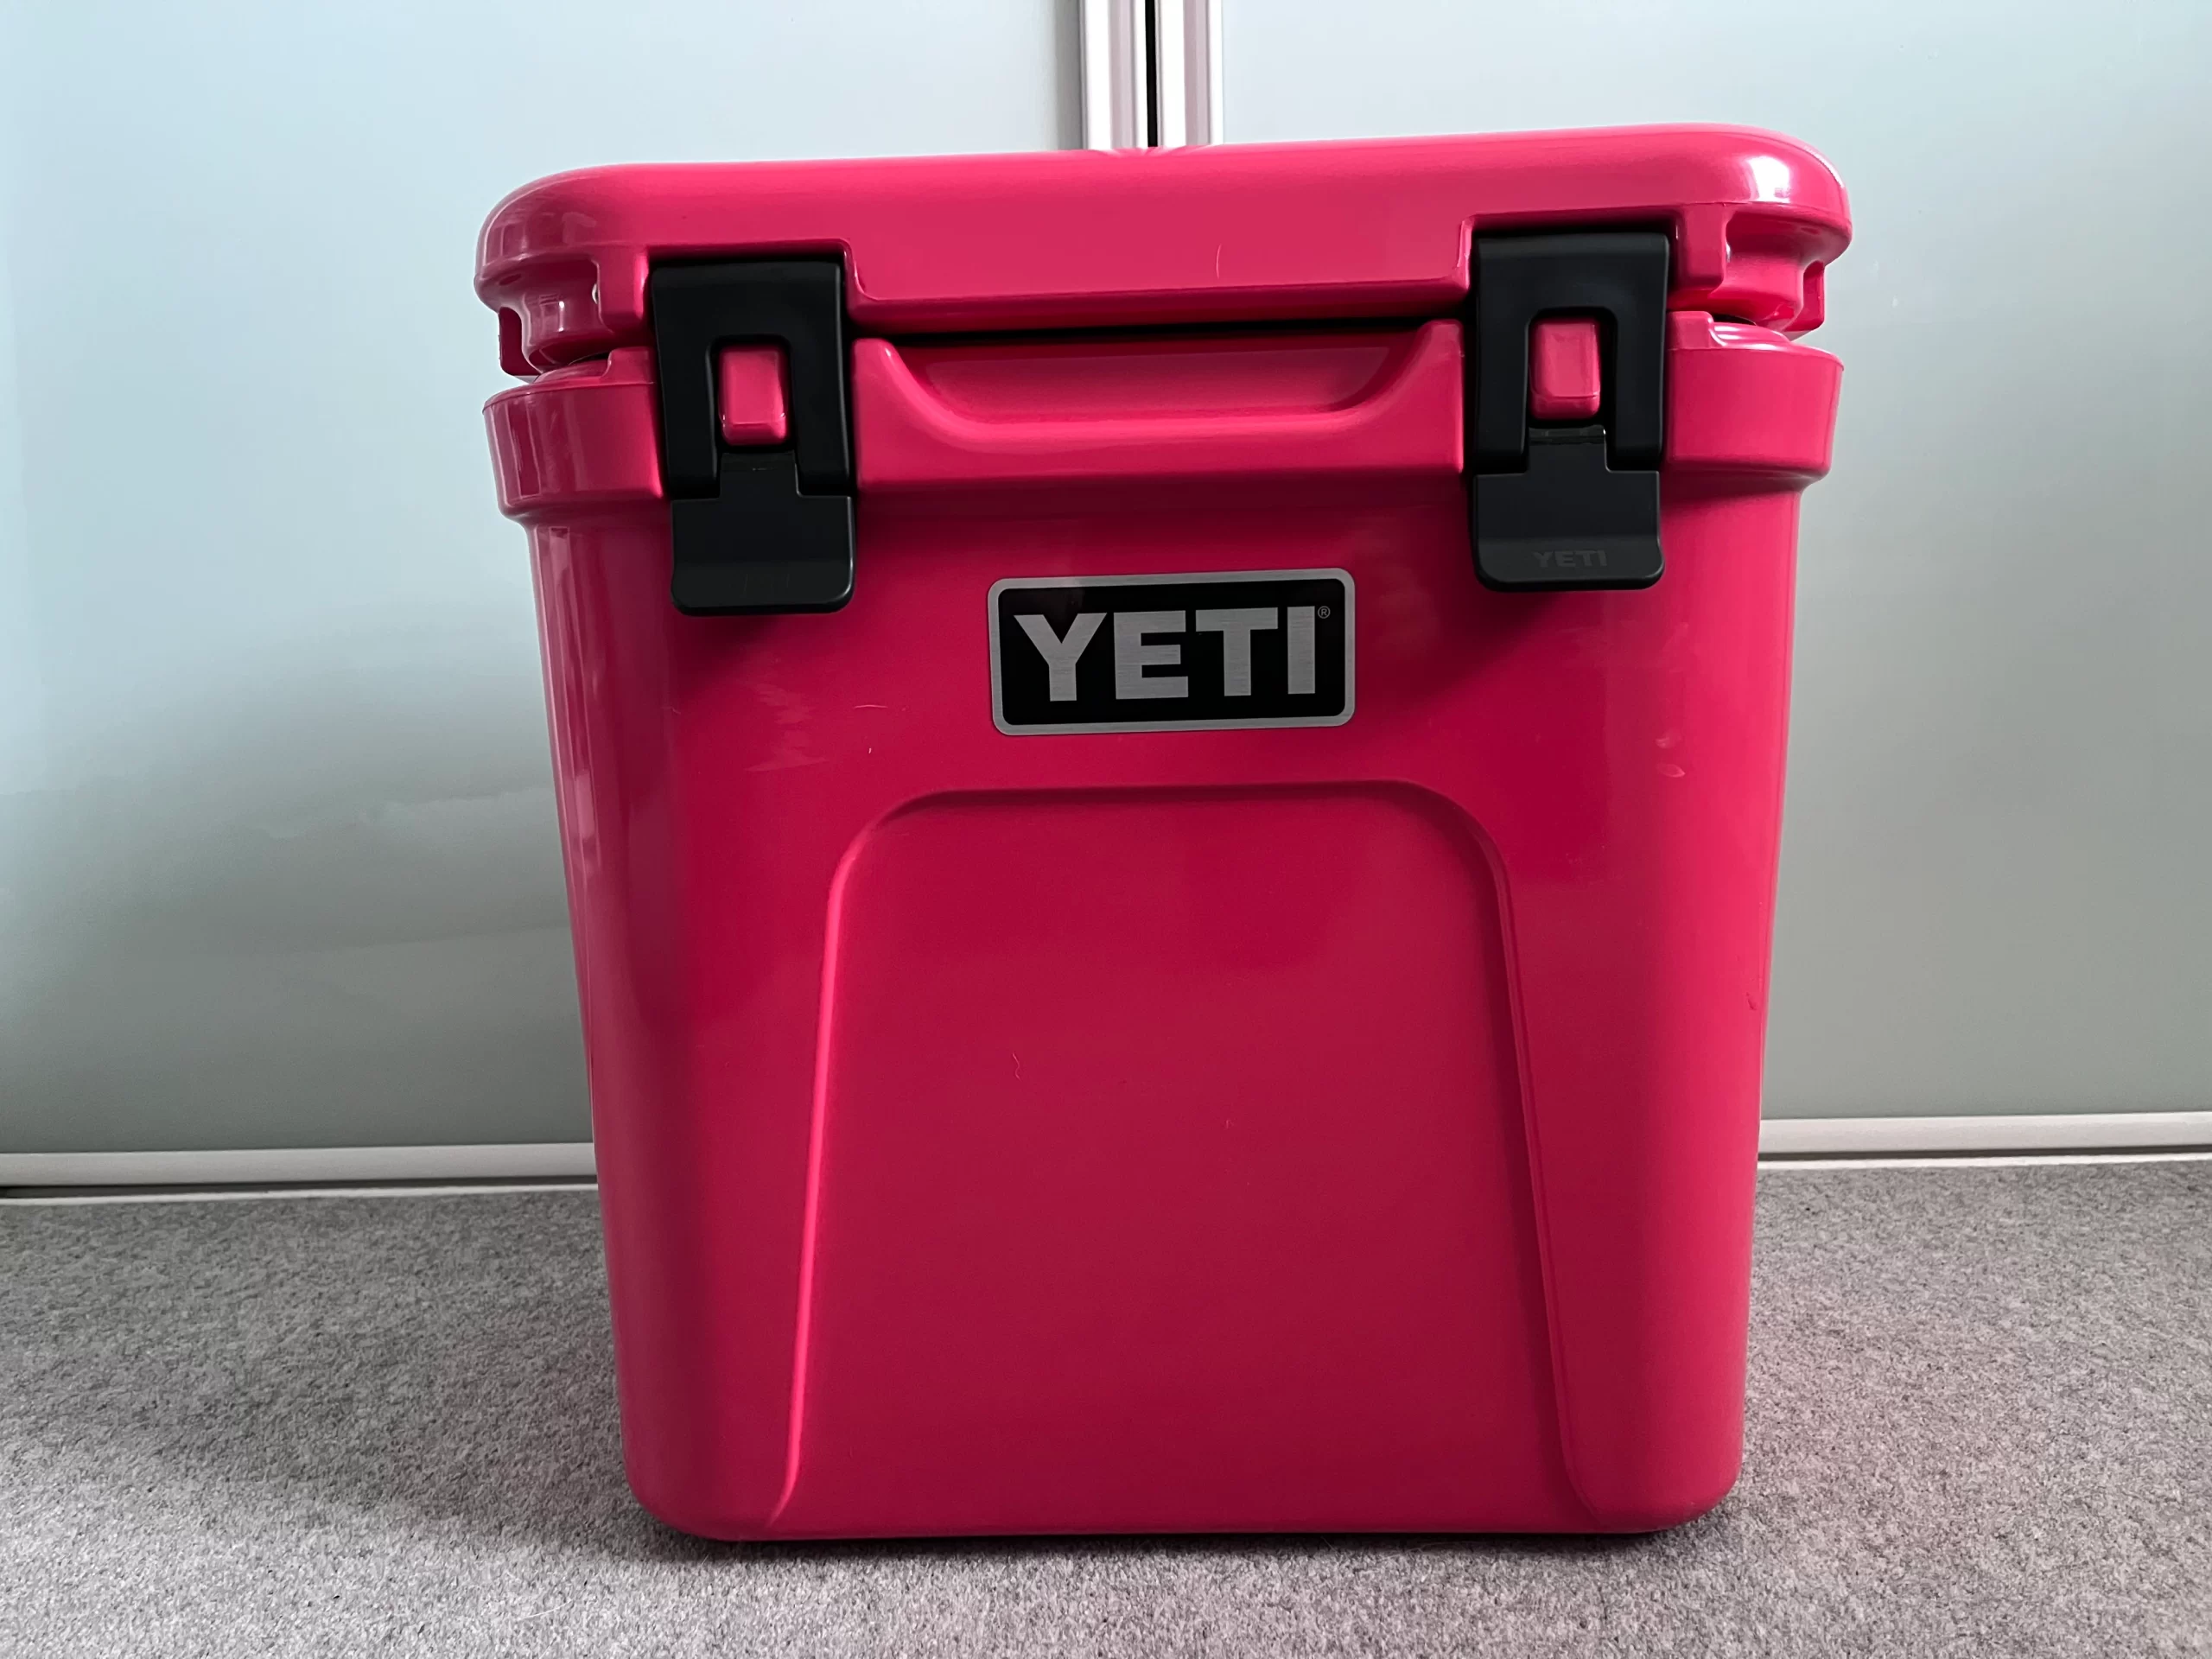 YETI Roadie 24 Cooler Bimini Pink VS Yeti Tundra 35 Comparison 